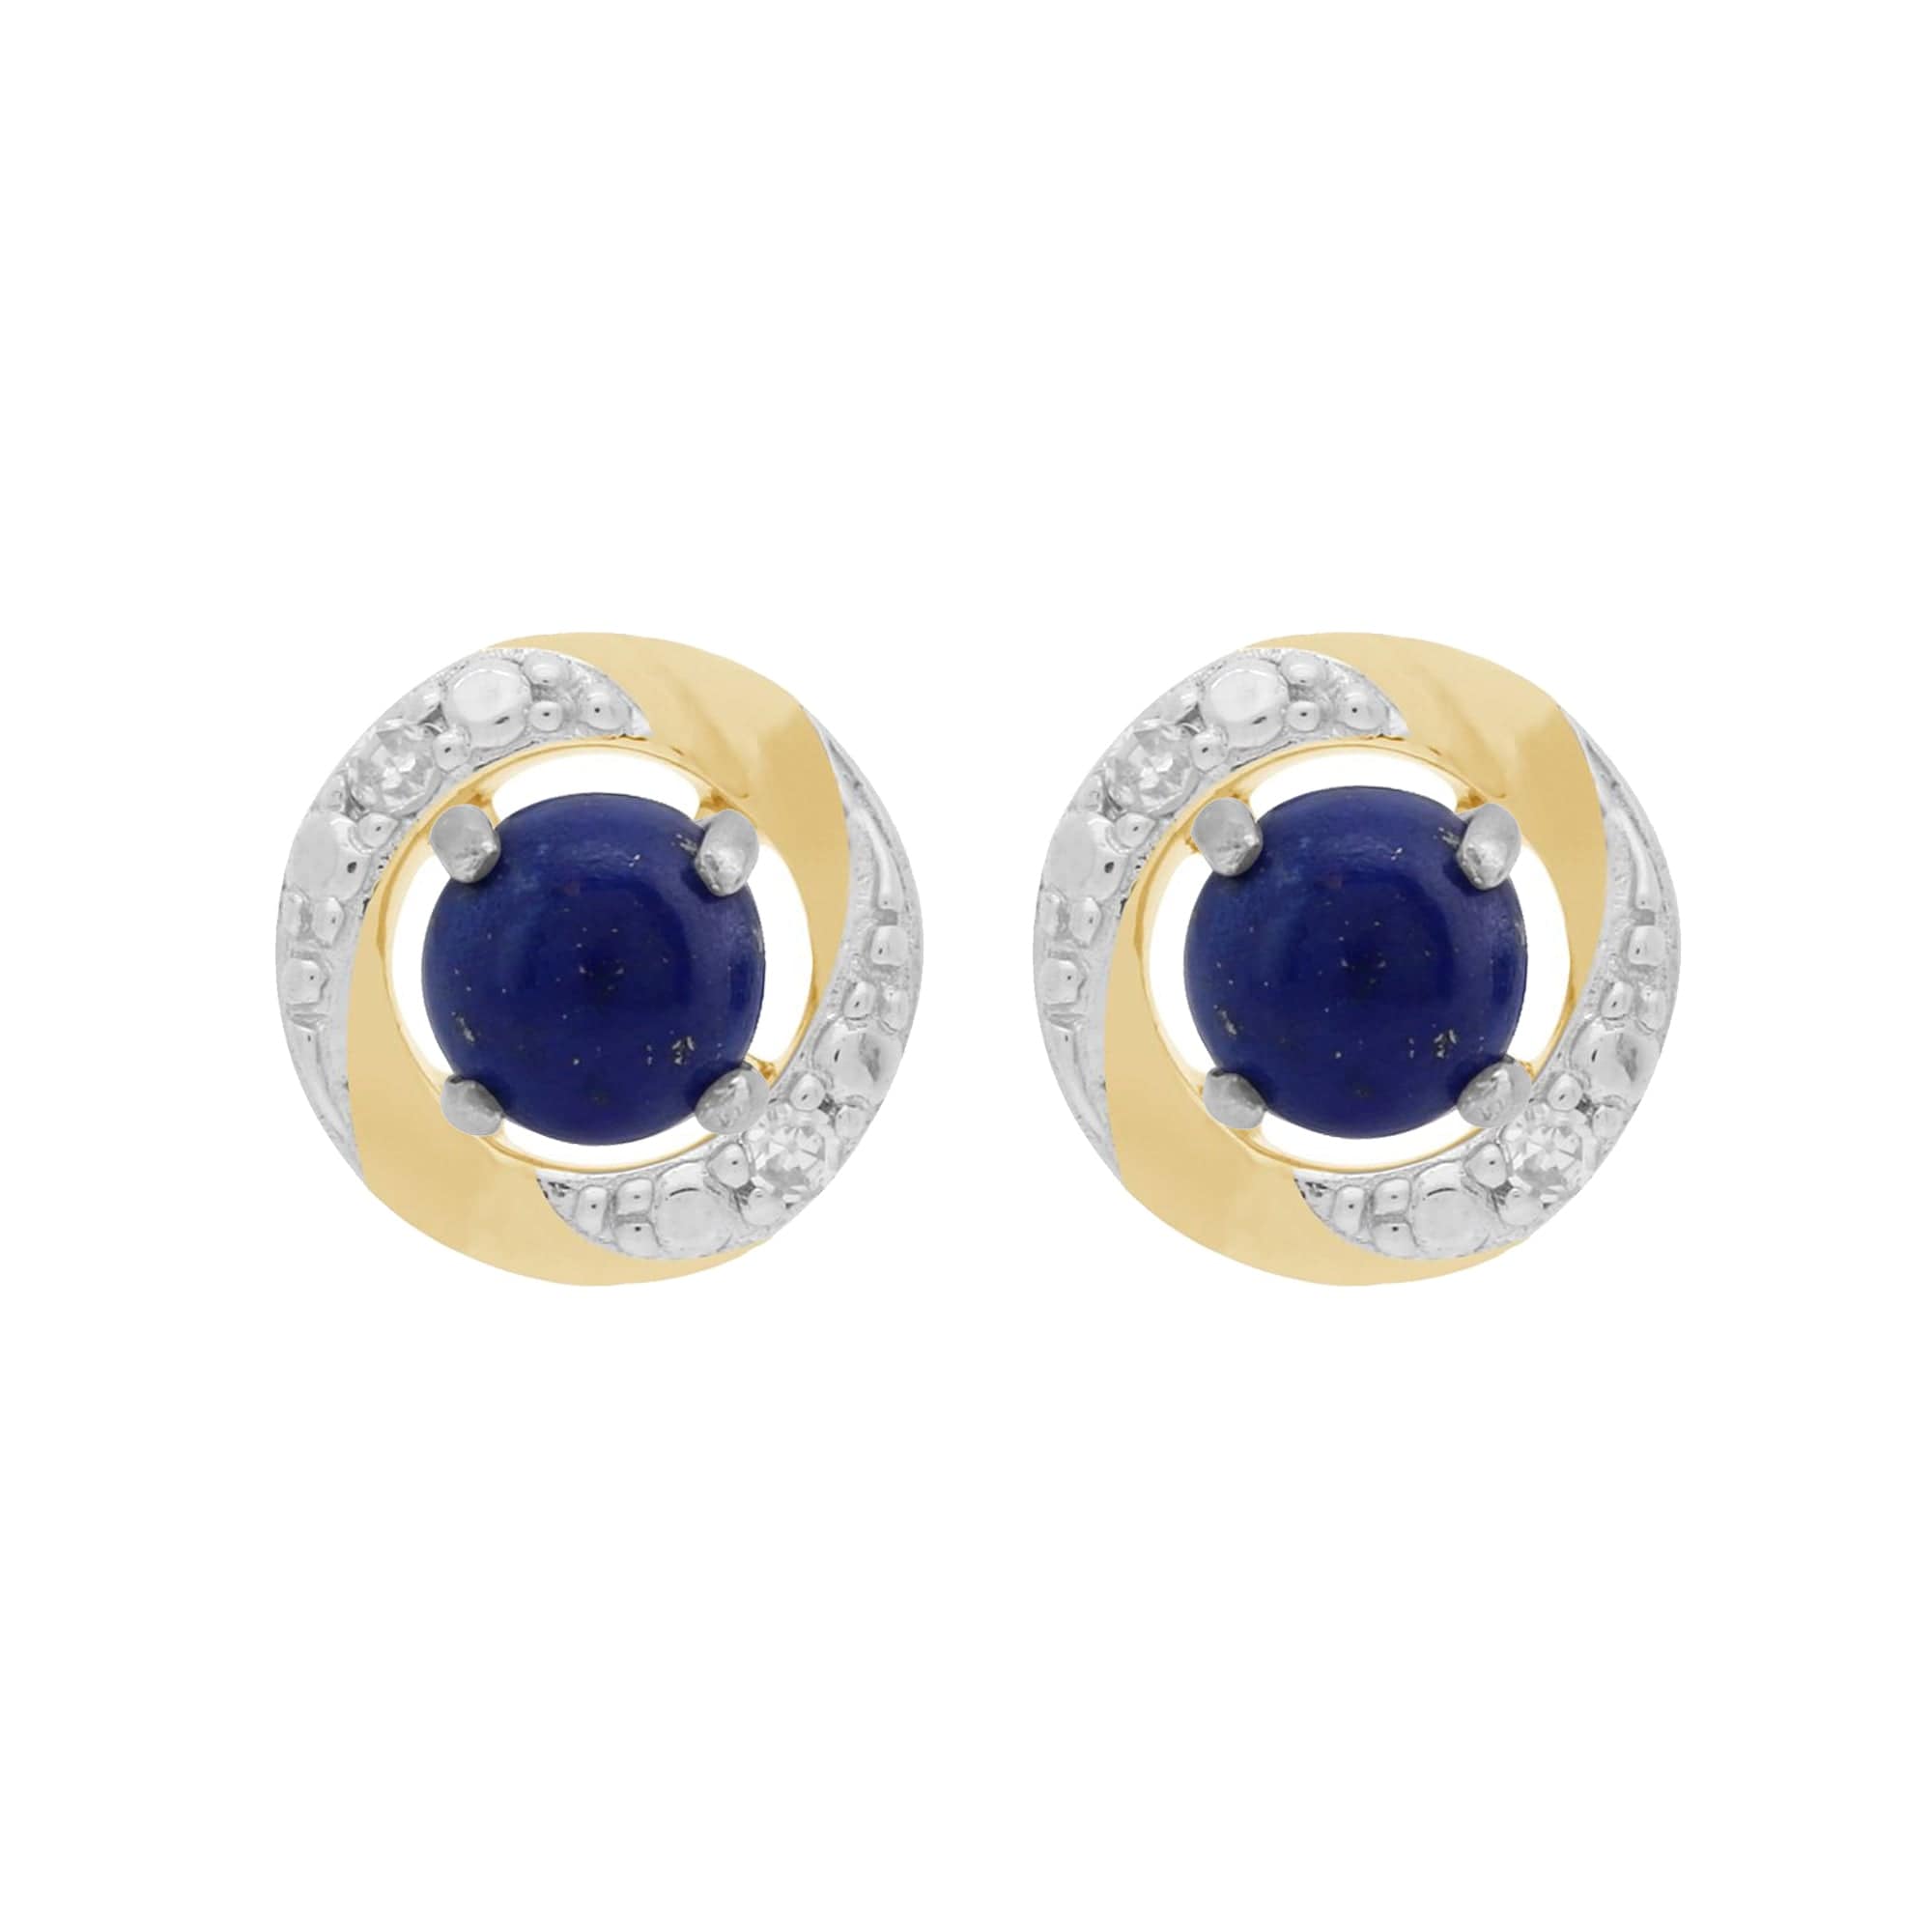 9ct White Gold Lapis Lazuli Stud Earrings & Diamond Halo Ear Jacket Image 1 